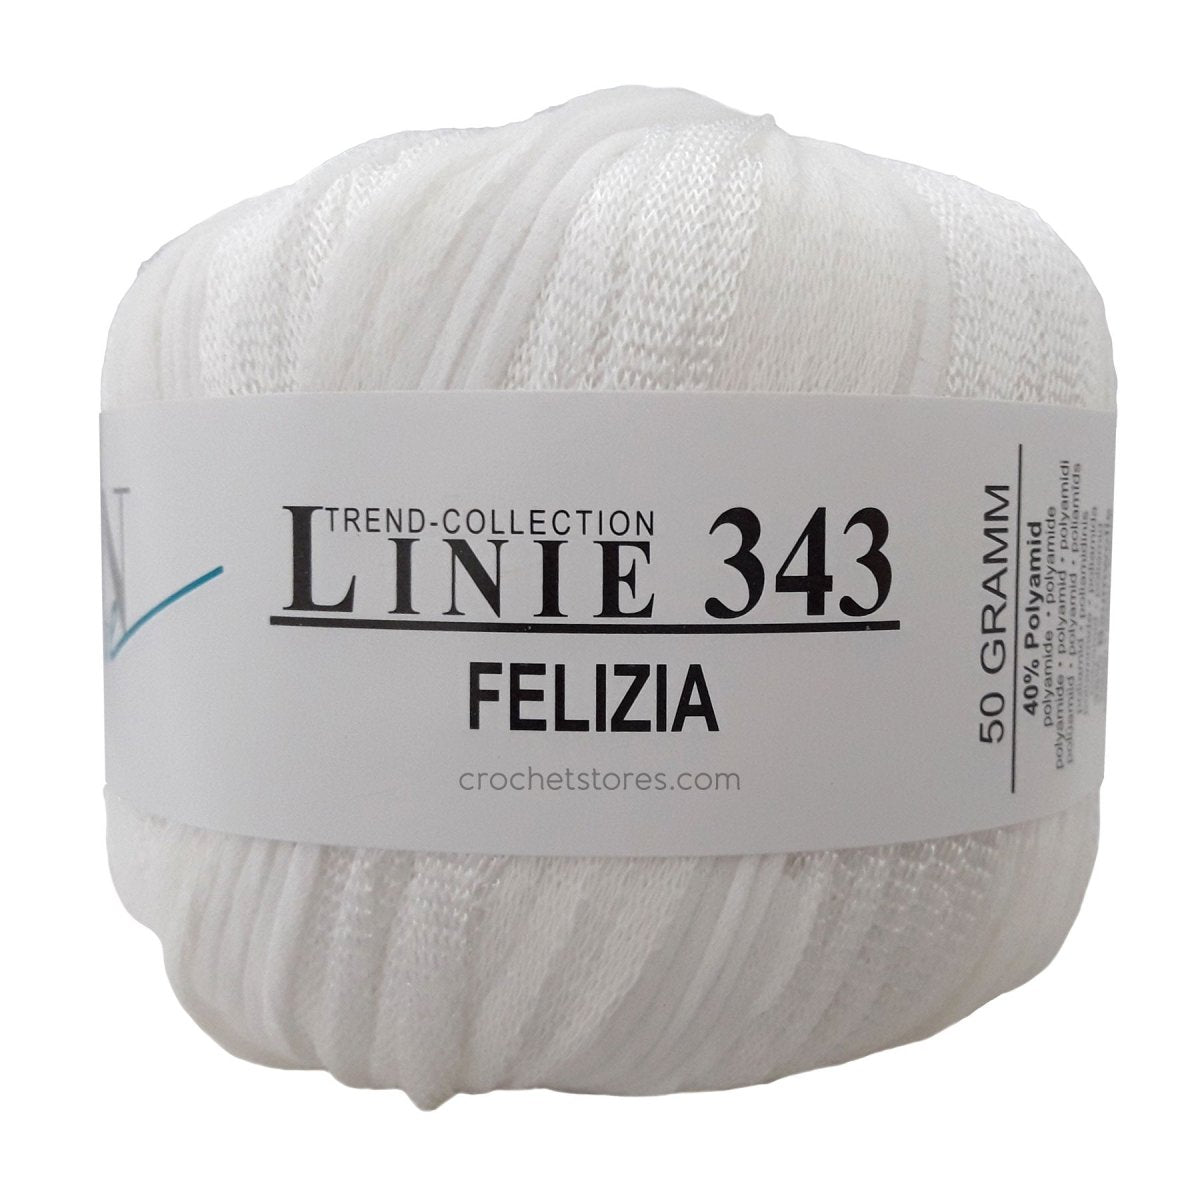 FELIZIA - Crochetstores110343-014014366146728